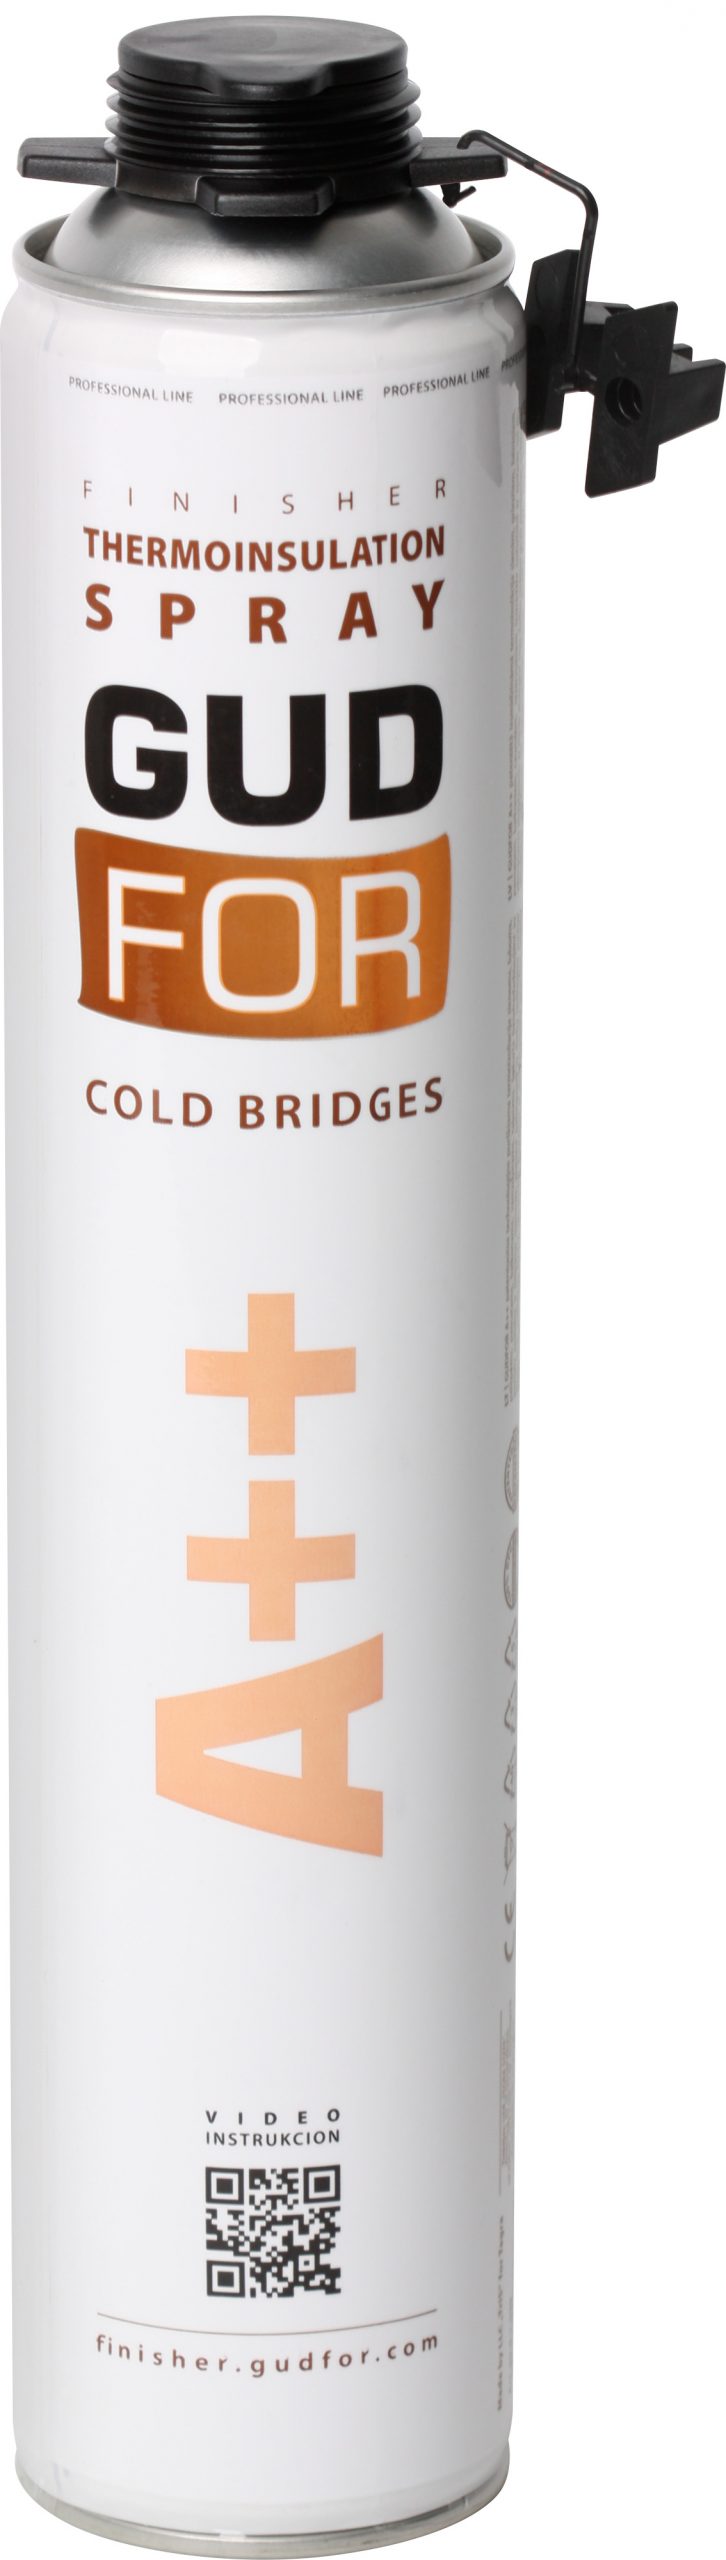 GUDFOR Thermal insulation spray for cold bridges GUDFOR A ++